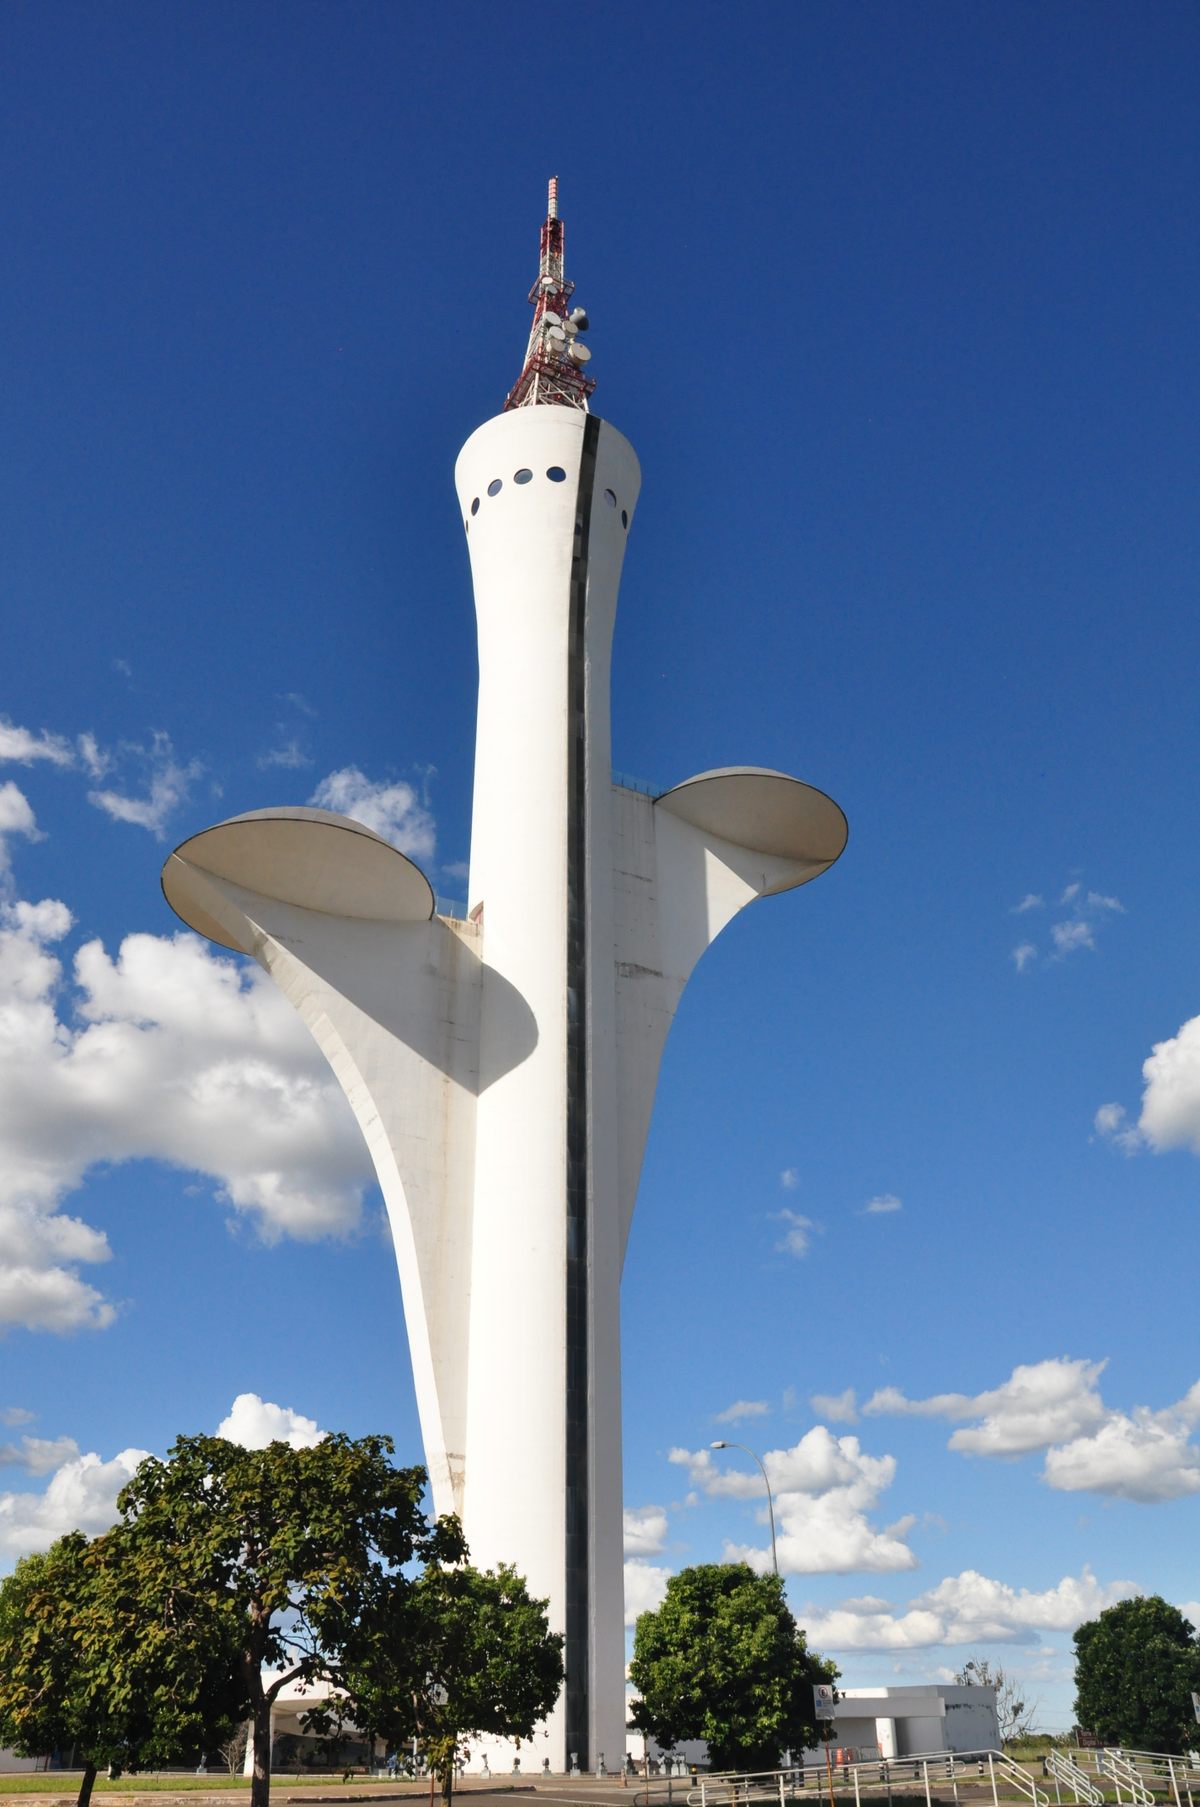 Torre de TV Digital – Brasília, Brazil - Atlas Obscura